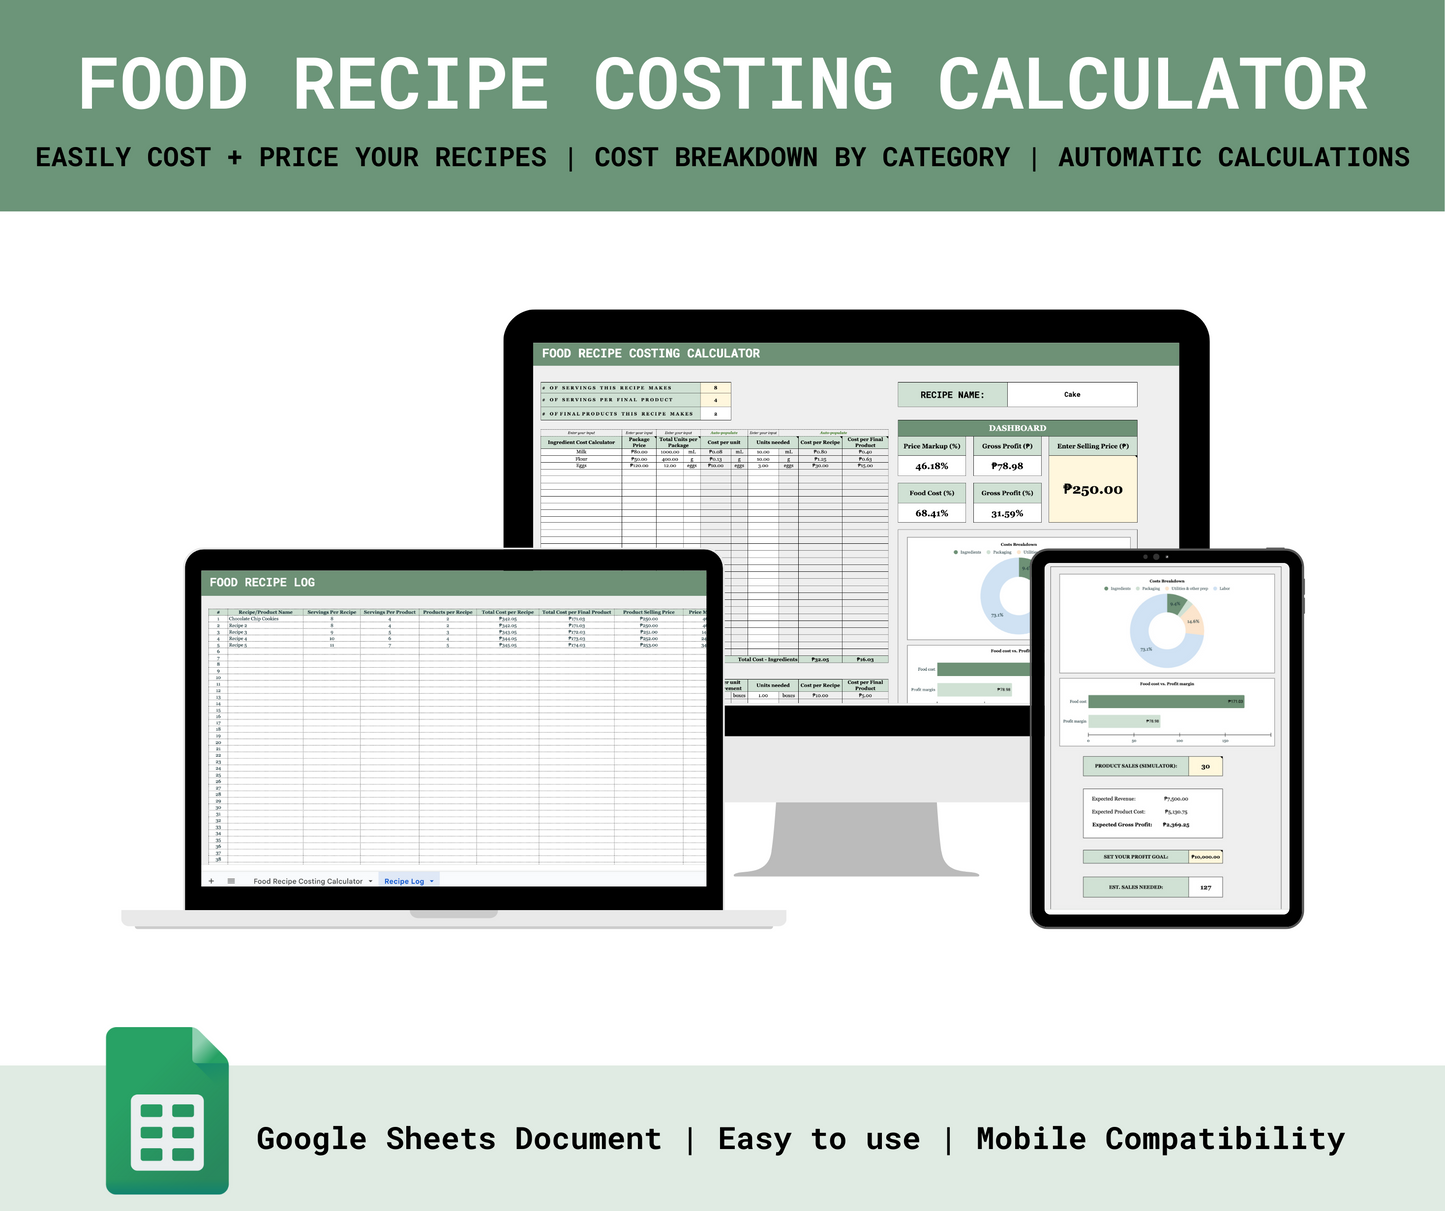 Food Recipe Costing Calculator